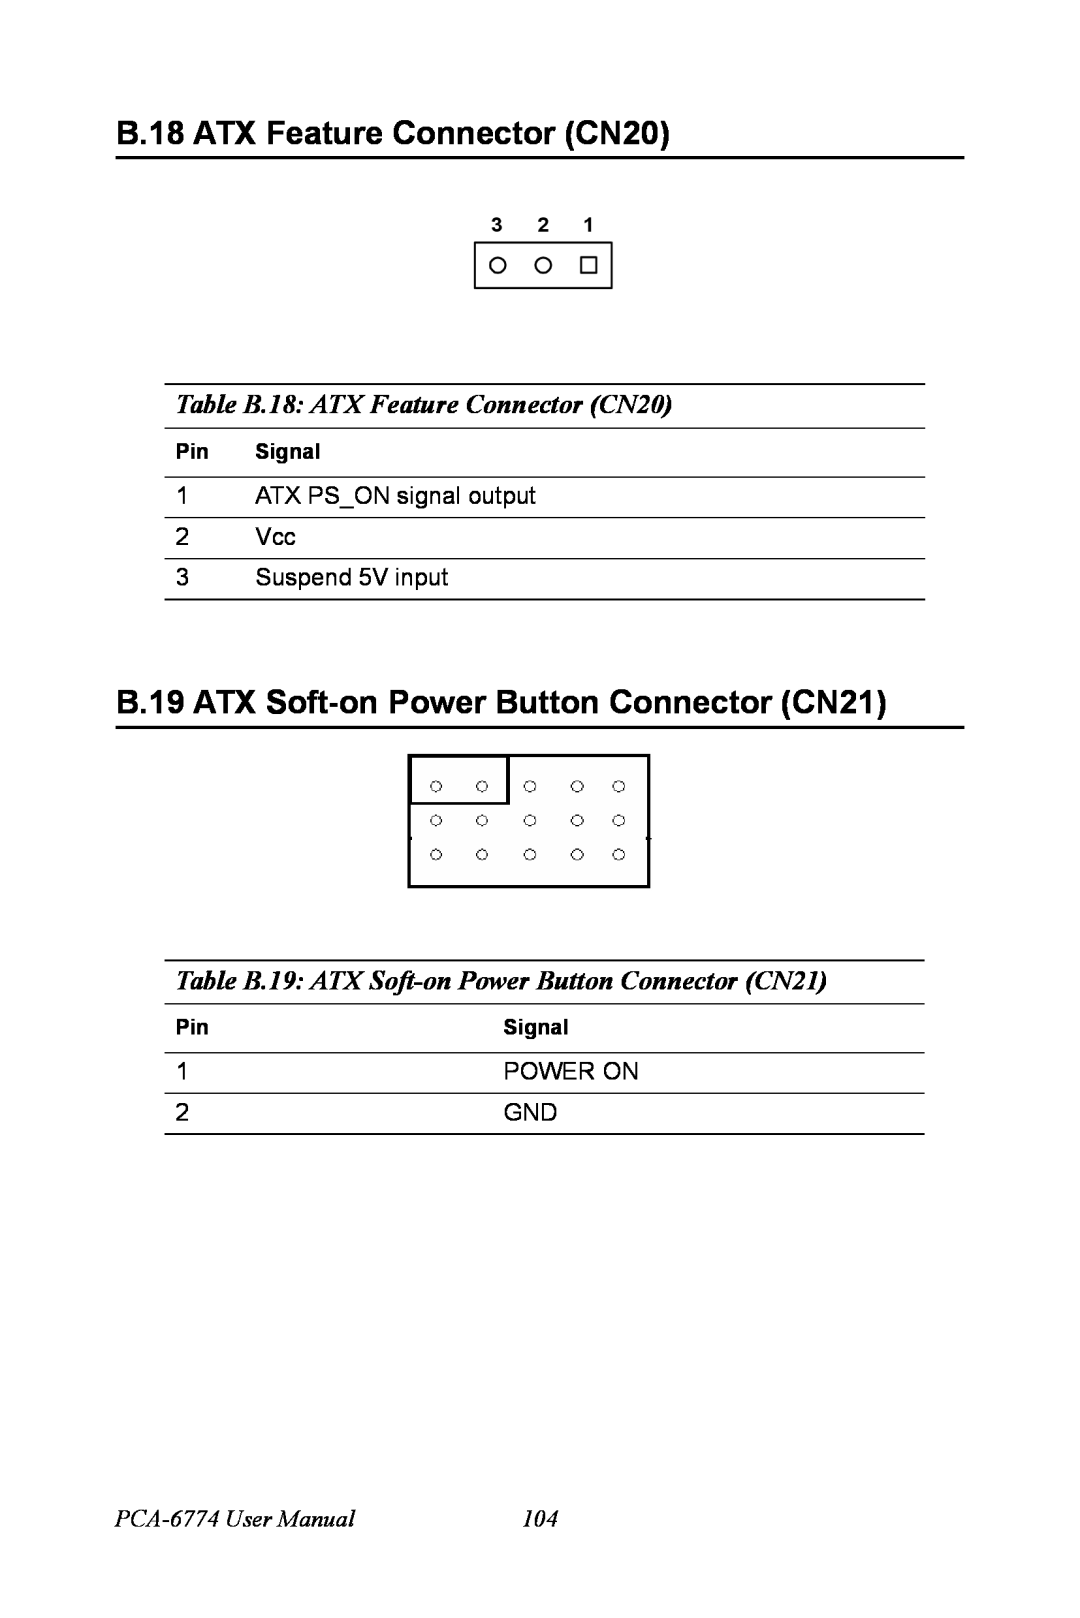 Advantech B.18 ATX Feature Connector CN20, B.19 ATX Soft-on Power Button Connector CN21, PCA-6774 User Manual, Signal 